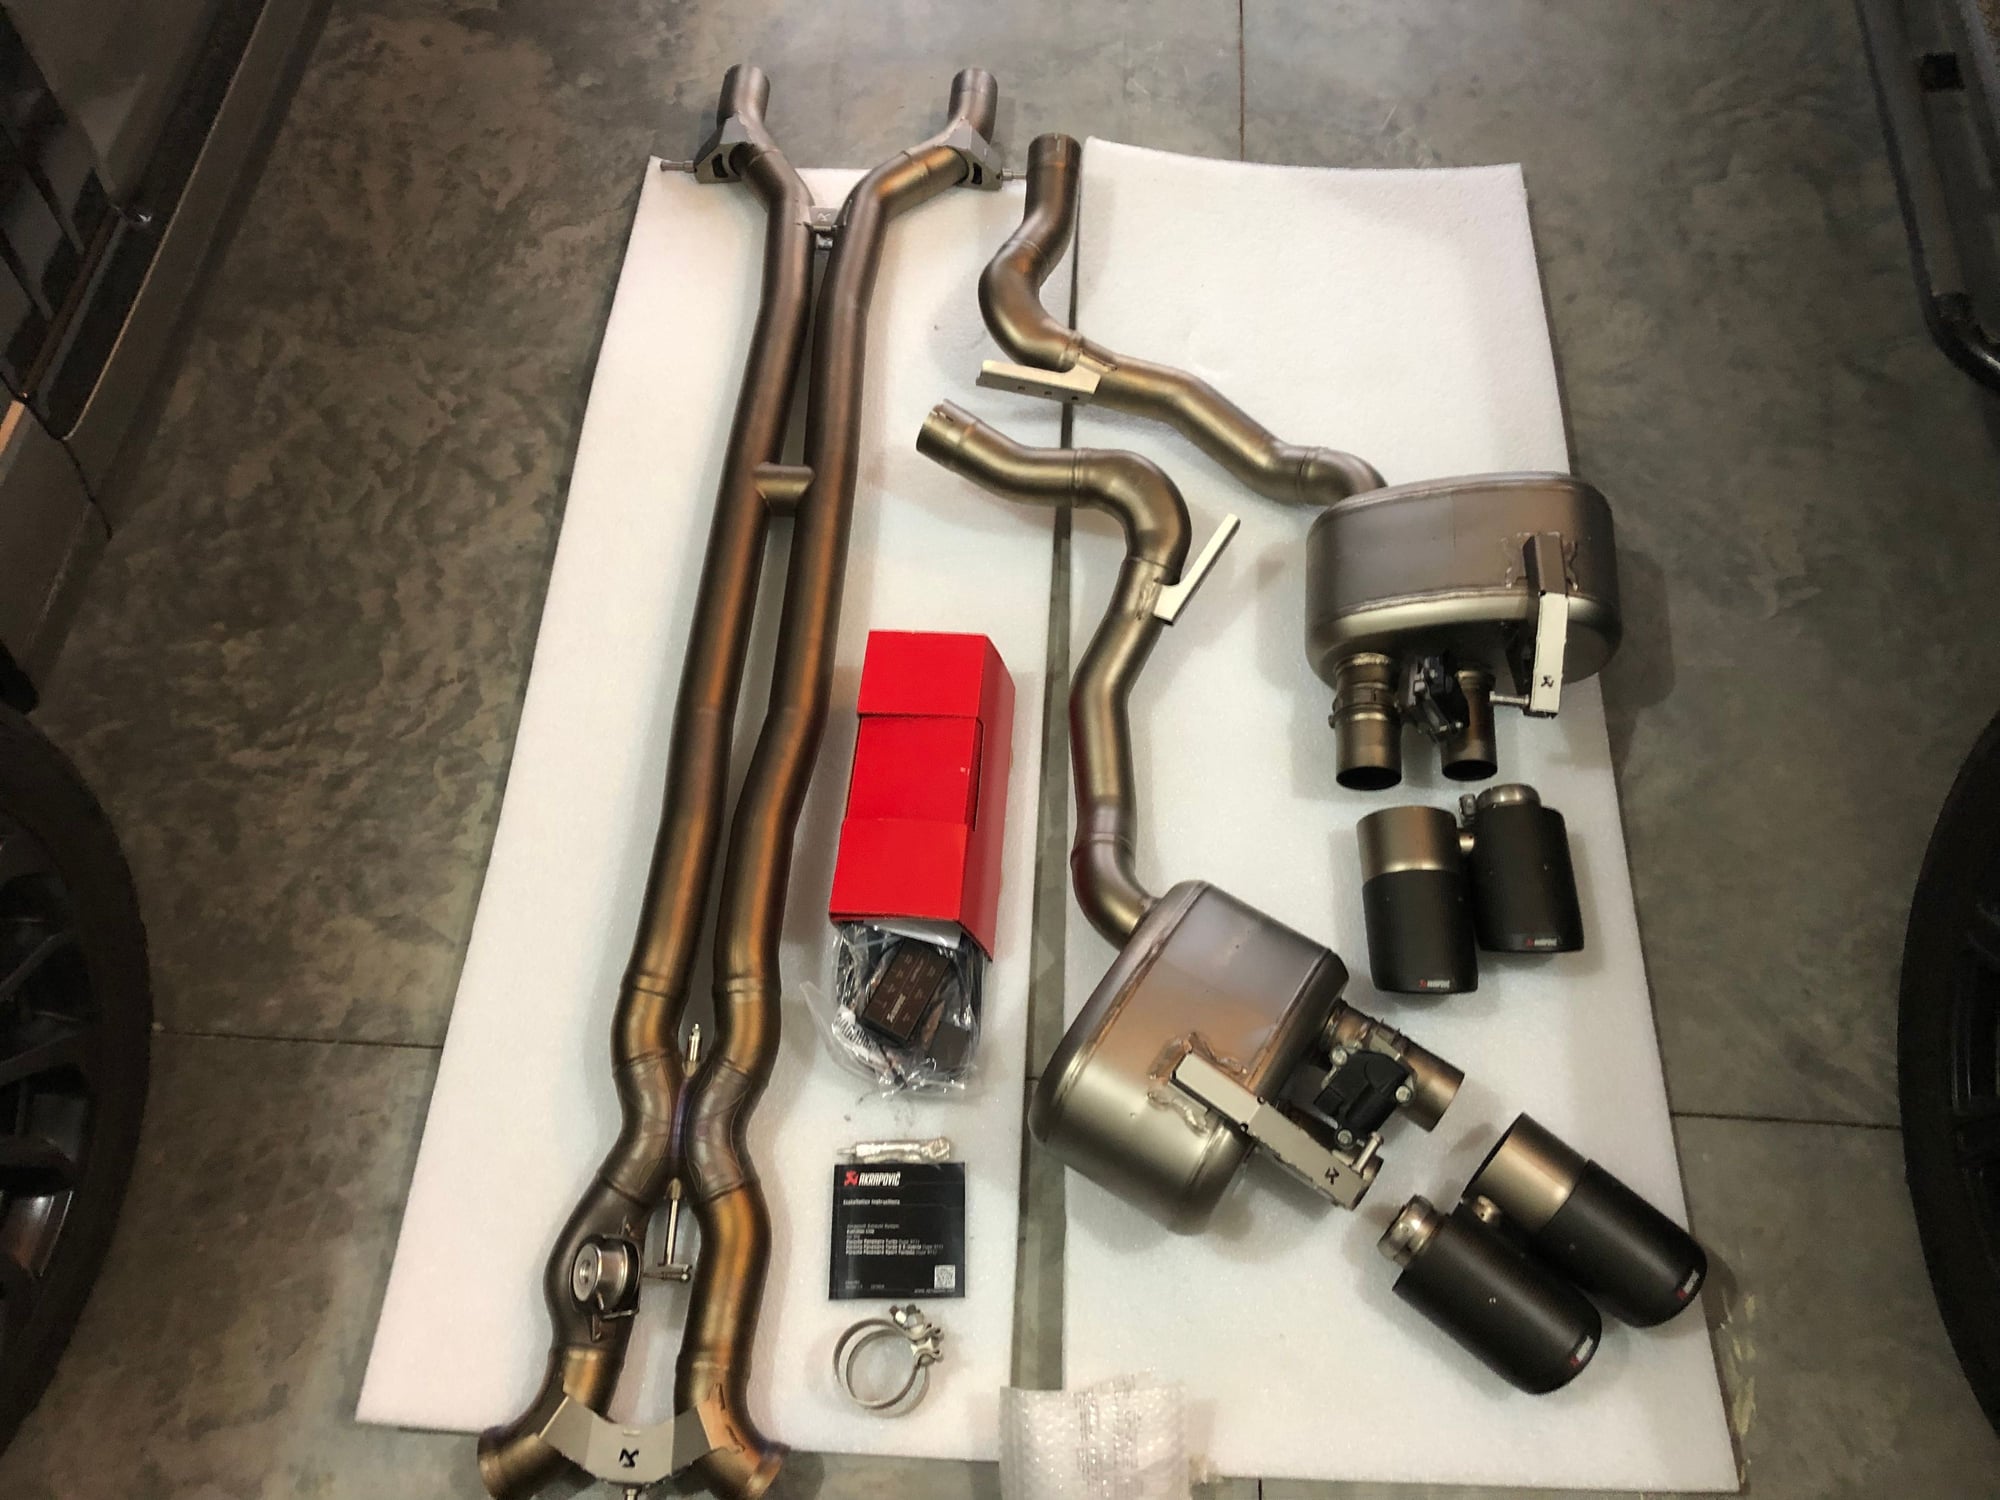 Engine - Exhaust - Akrapovic Panamera Turbo / S E-Hybrid / Sport Turismo 971Carbon Tips - Used - 2017 to 2019 Porsche Panamera - Dakota Dunes, SD 57049, United States